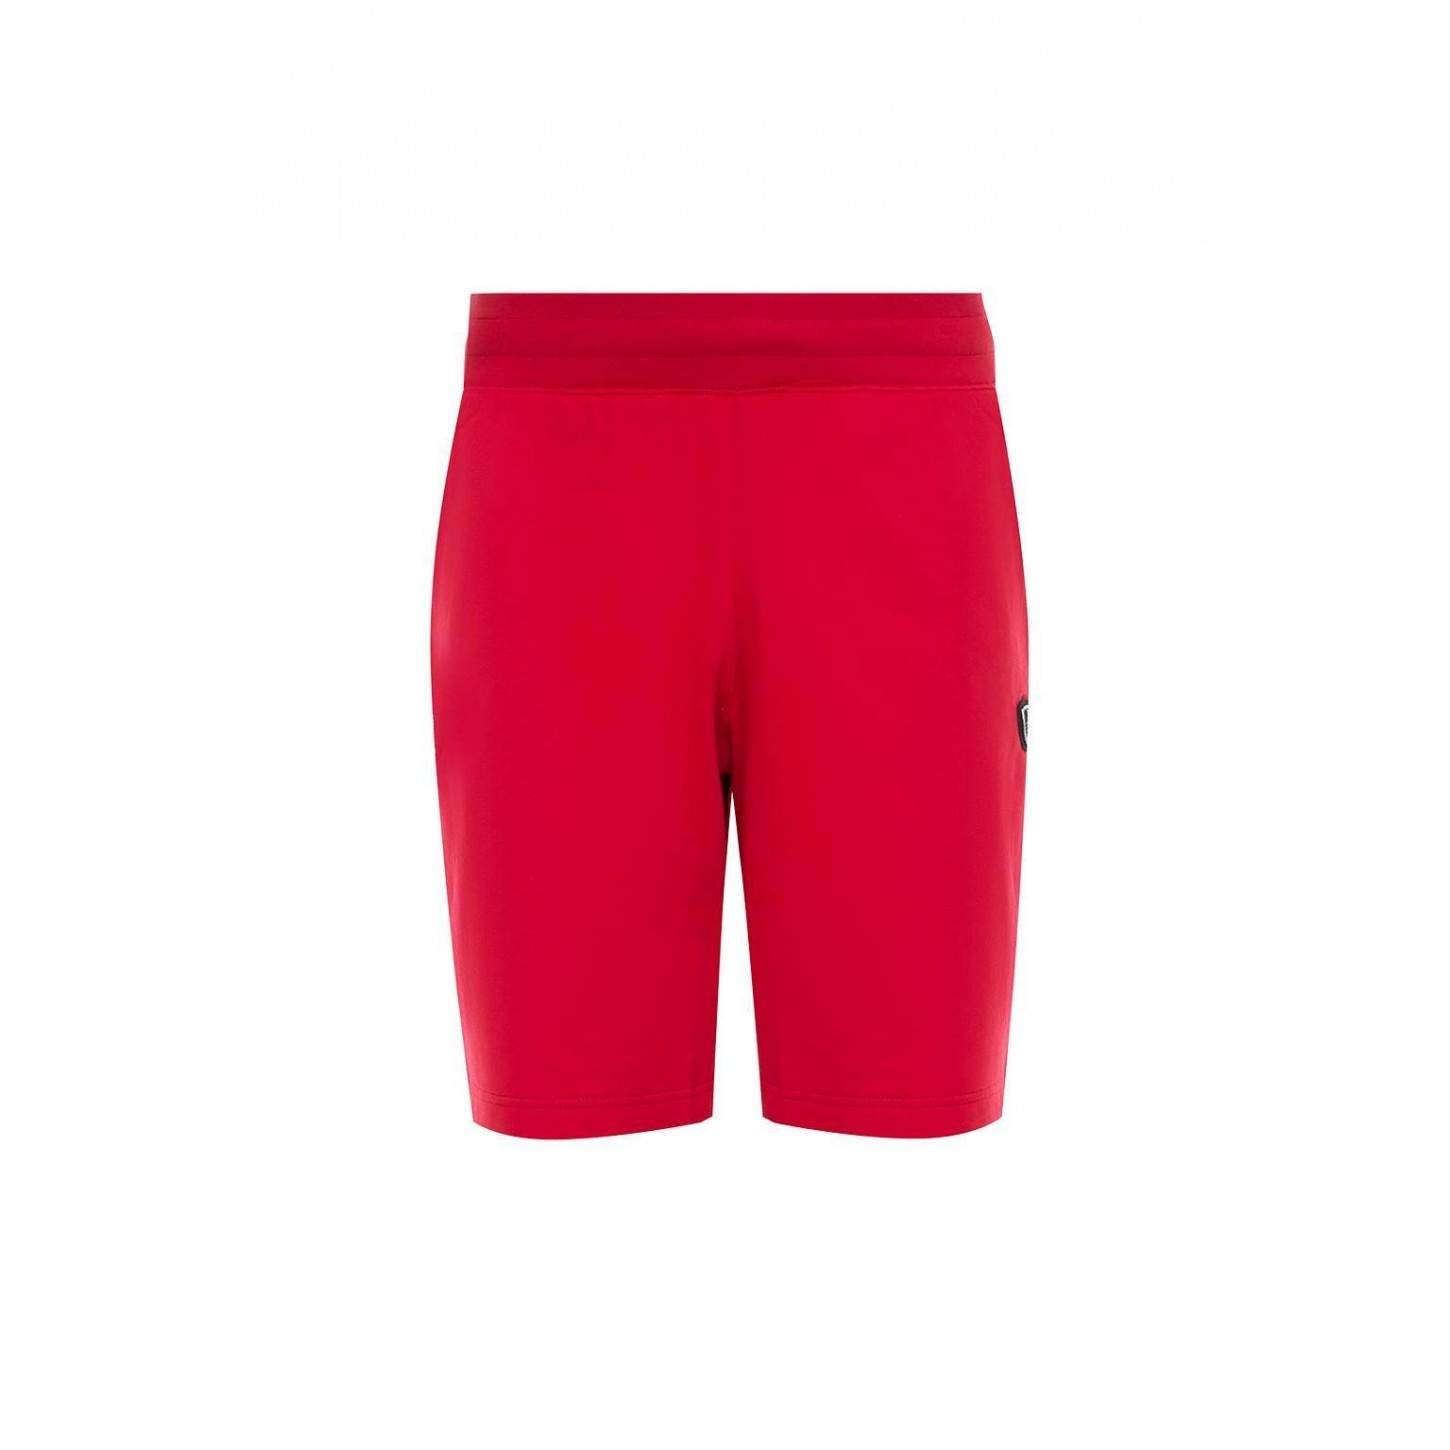 Shorts shorts EA7 Emporio Armani Man 8NPS75 red - VertSport